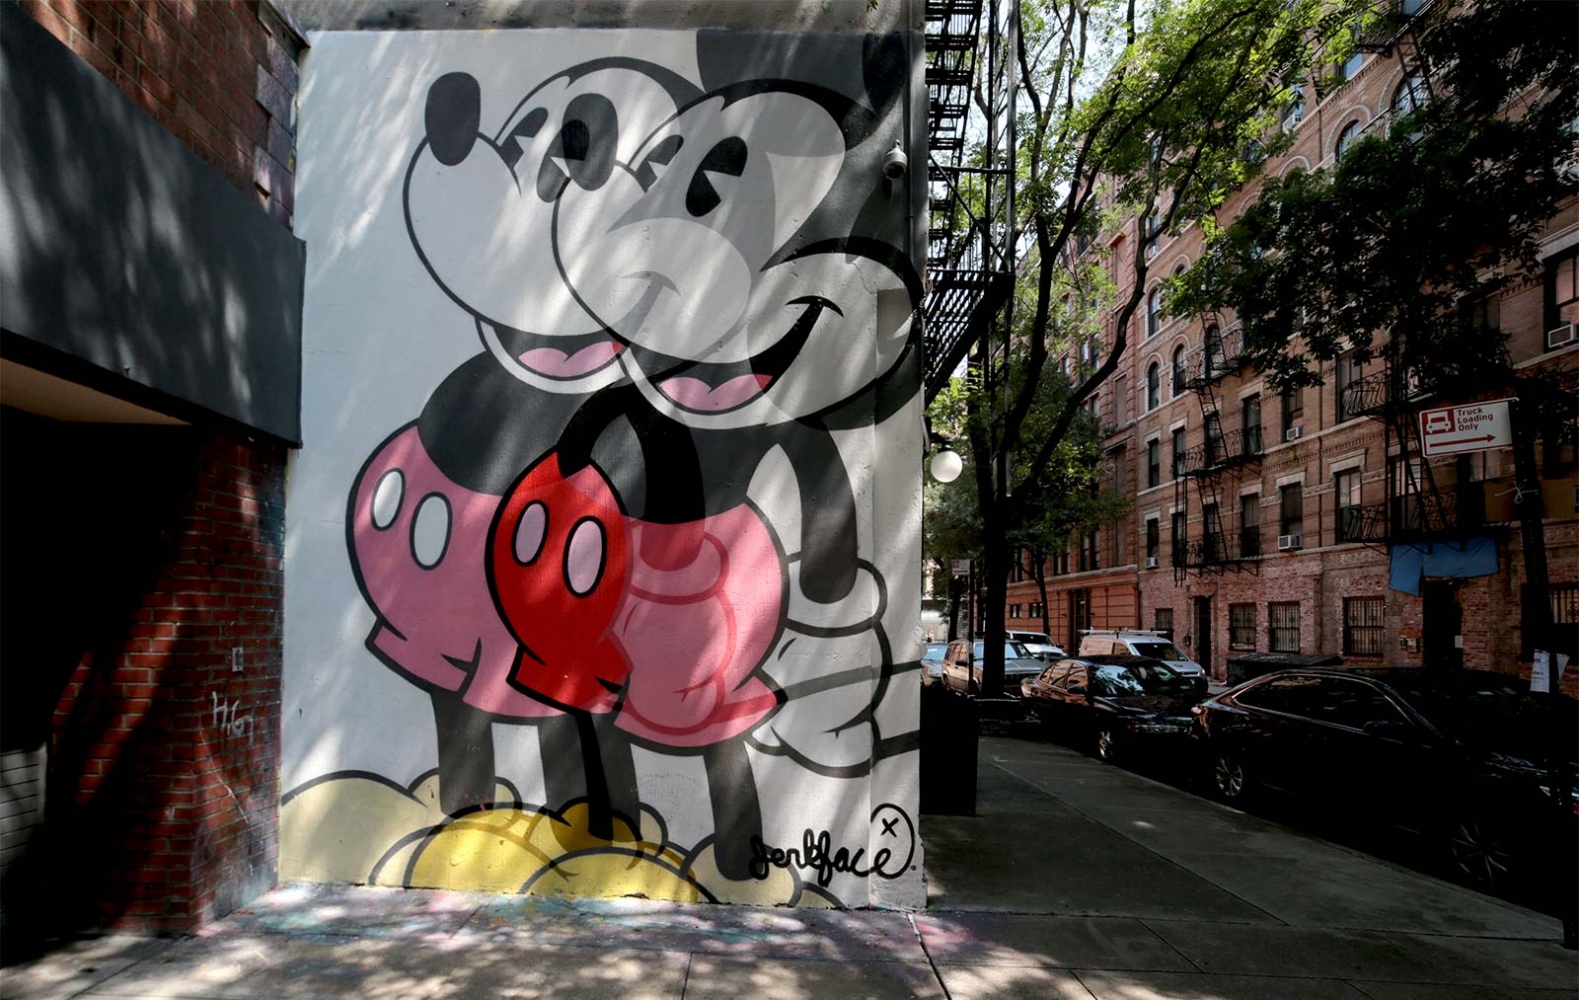 Image from Graffiti Art - East Village - New York